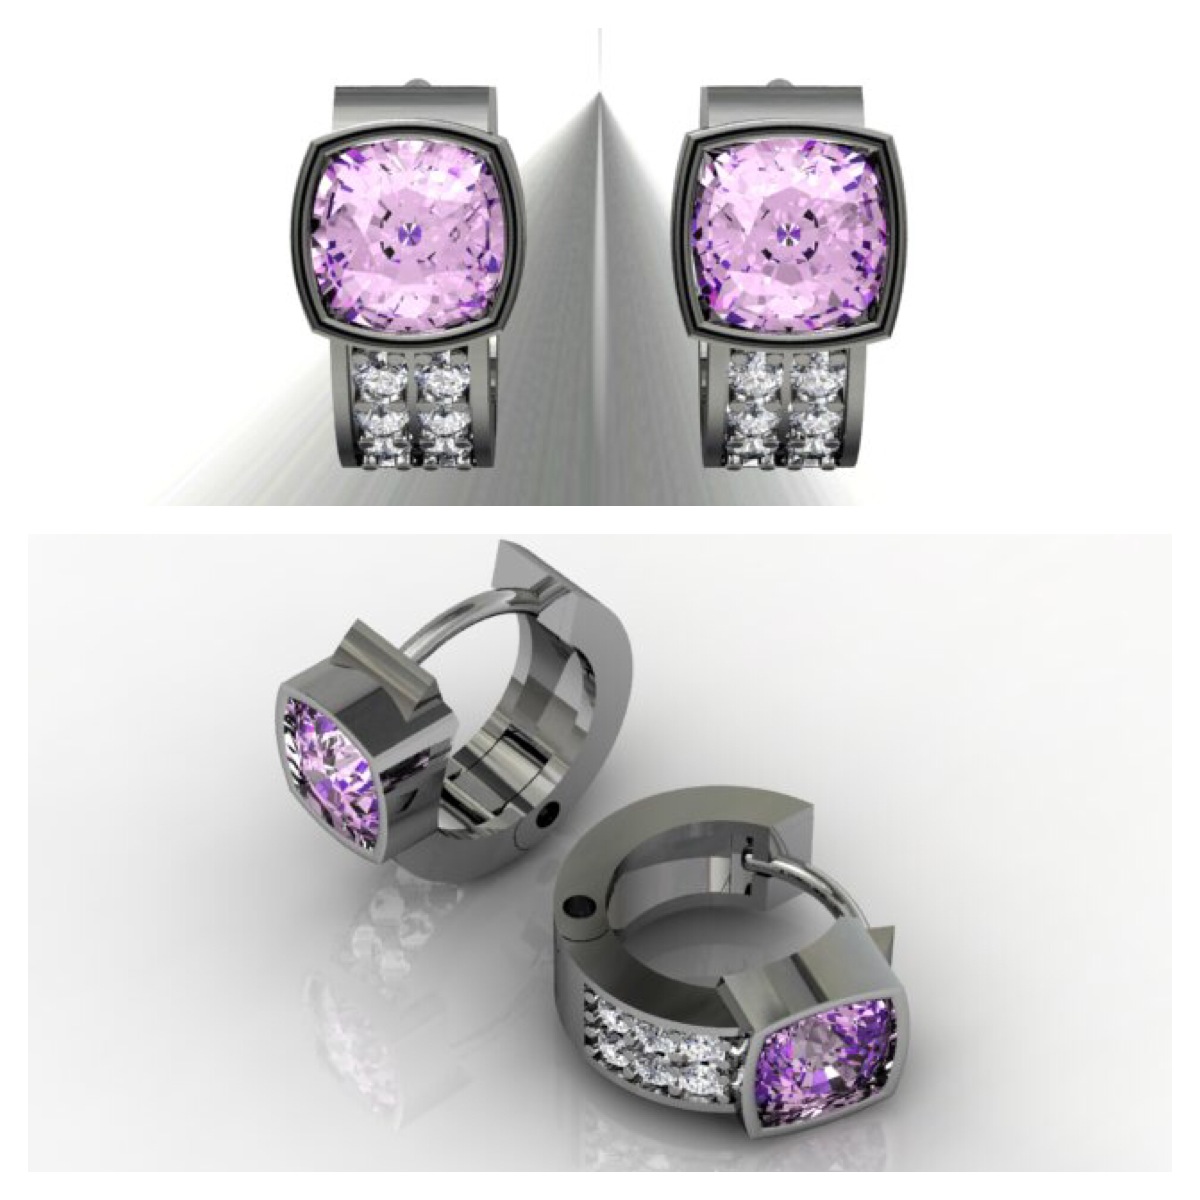 tanzanite and diamond earrings